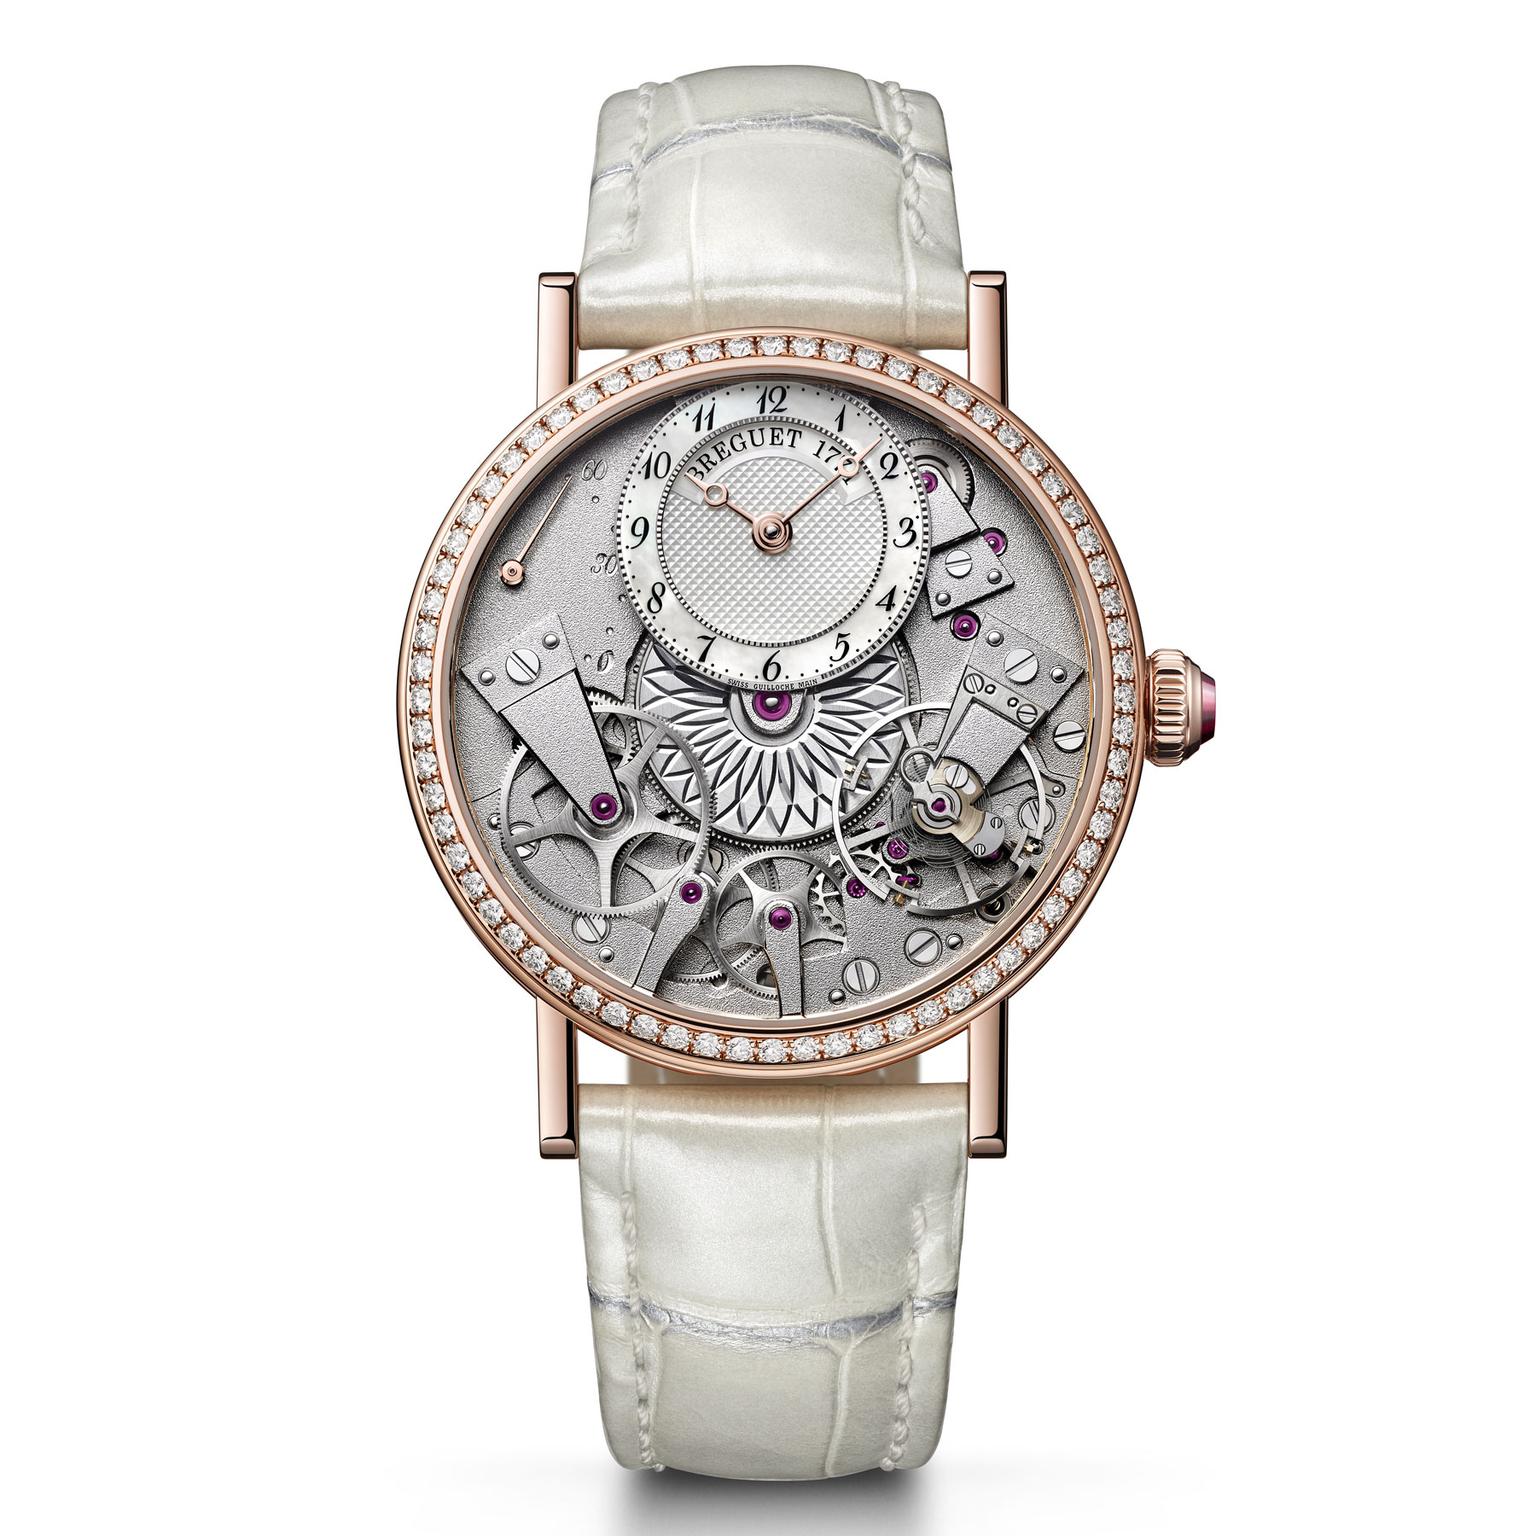 Breguet Tradition Dame 7038 watch